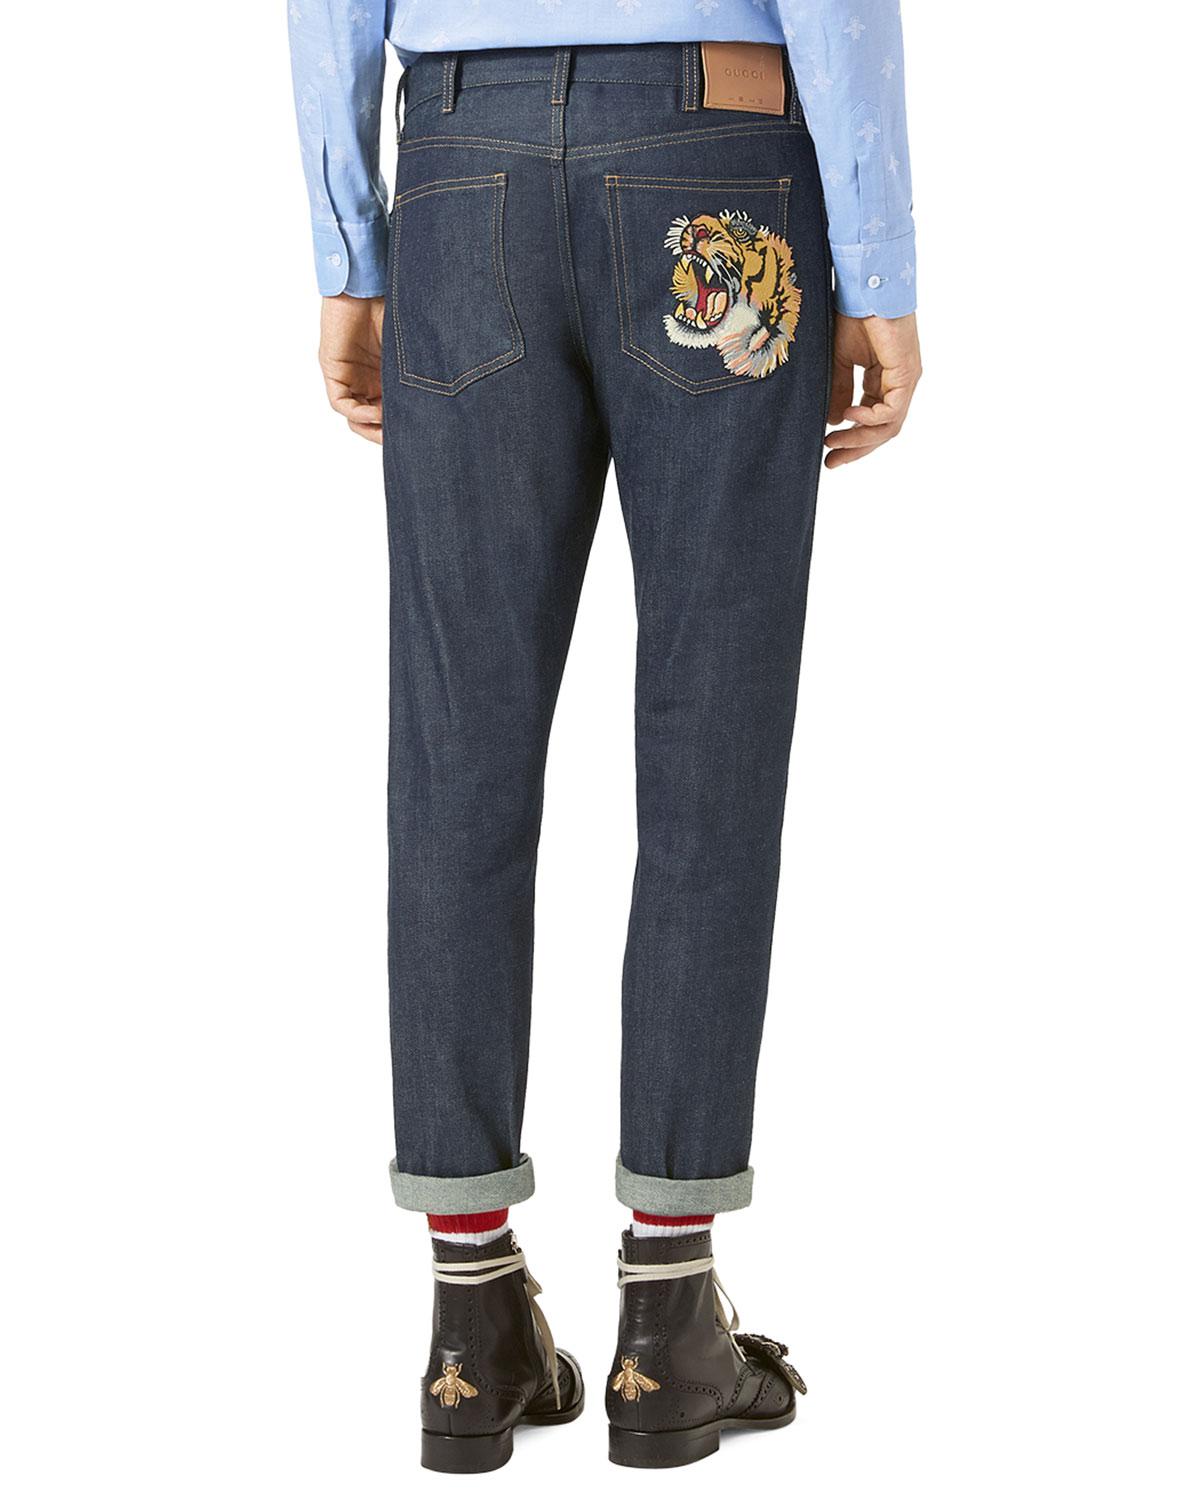 Lyst - Gucci Stretch-denim Slim Pants W/tiger in Blue for Men